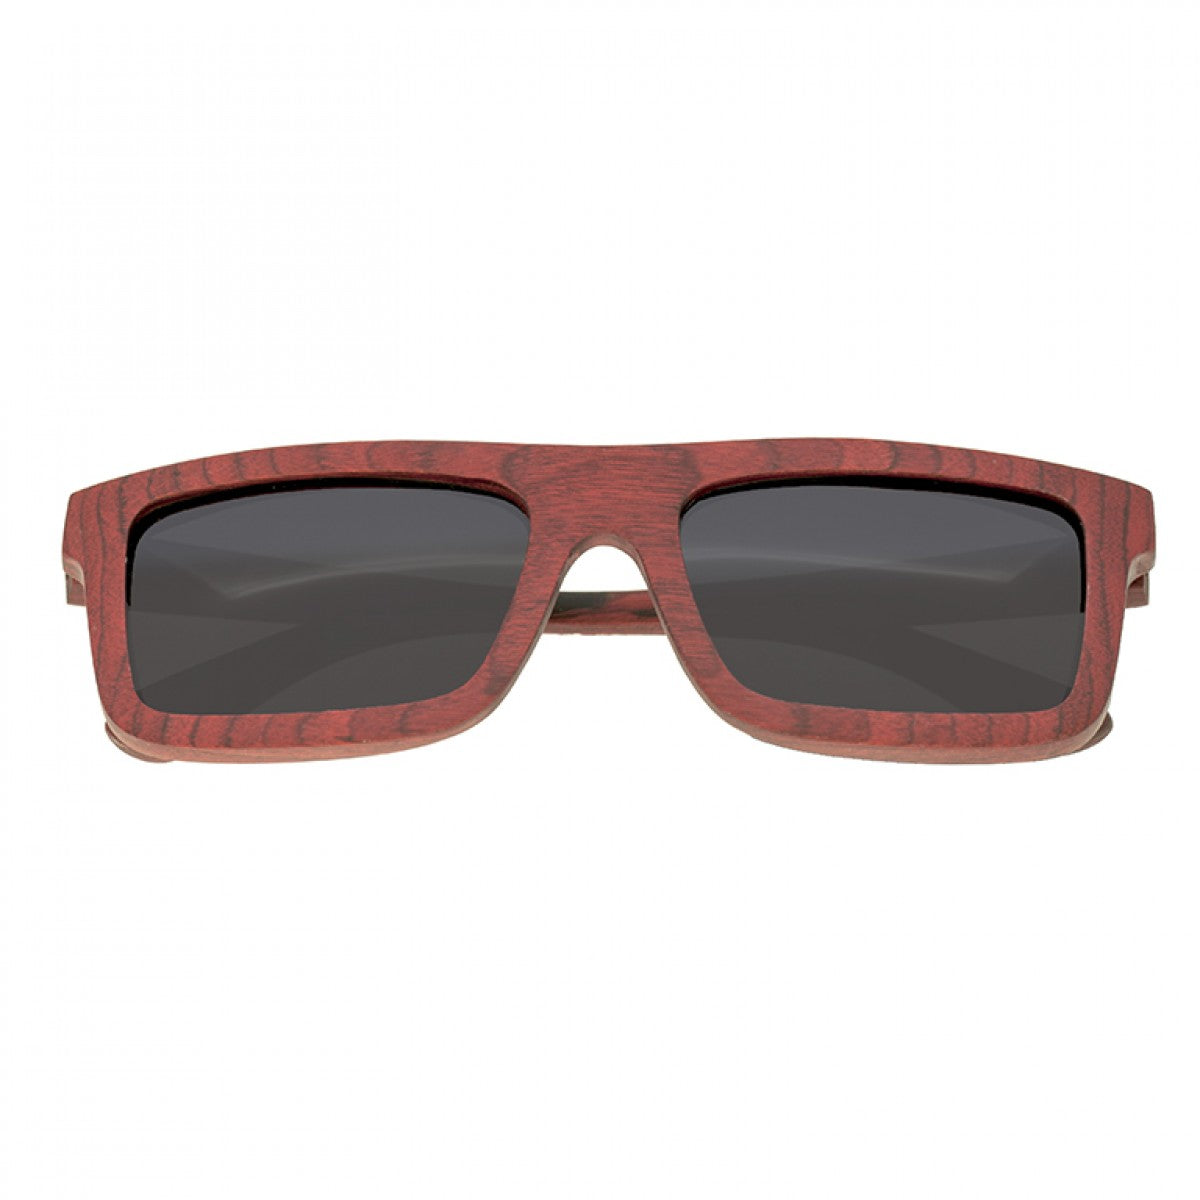 Spectrum Clark Wood Polarized Sunglasses - Cherry/Black - SSGS119BK